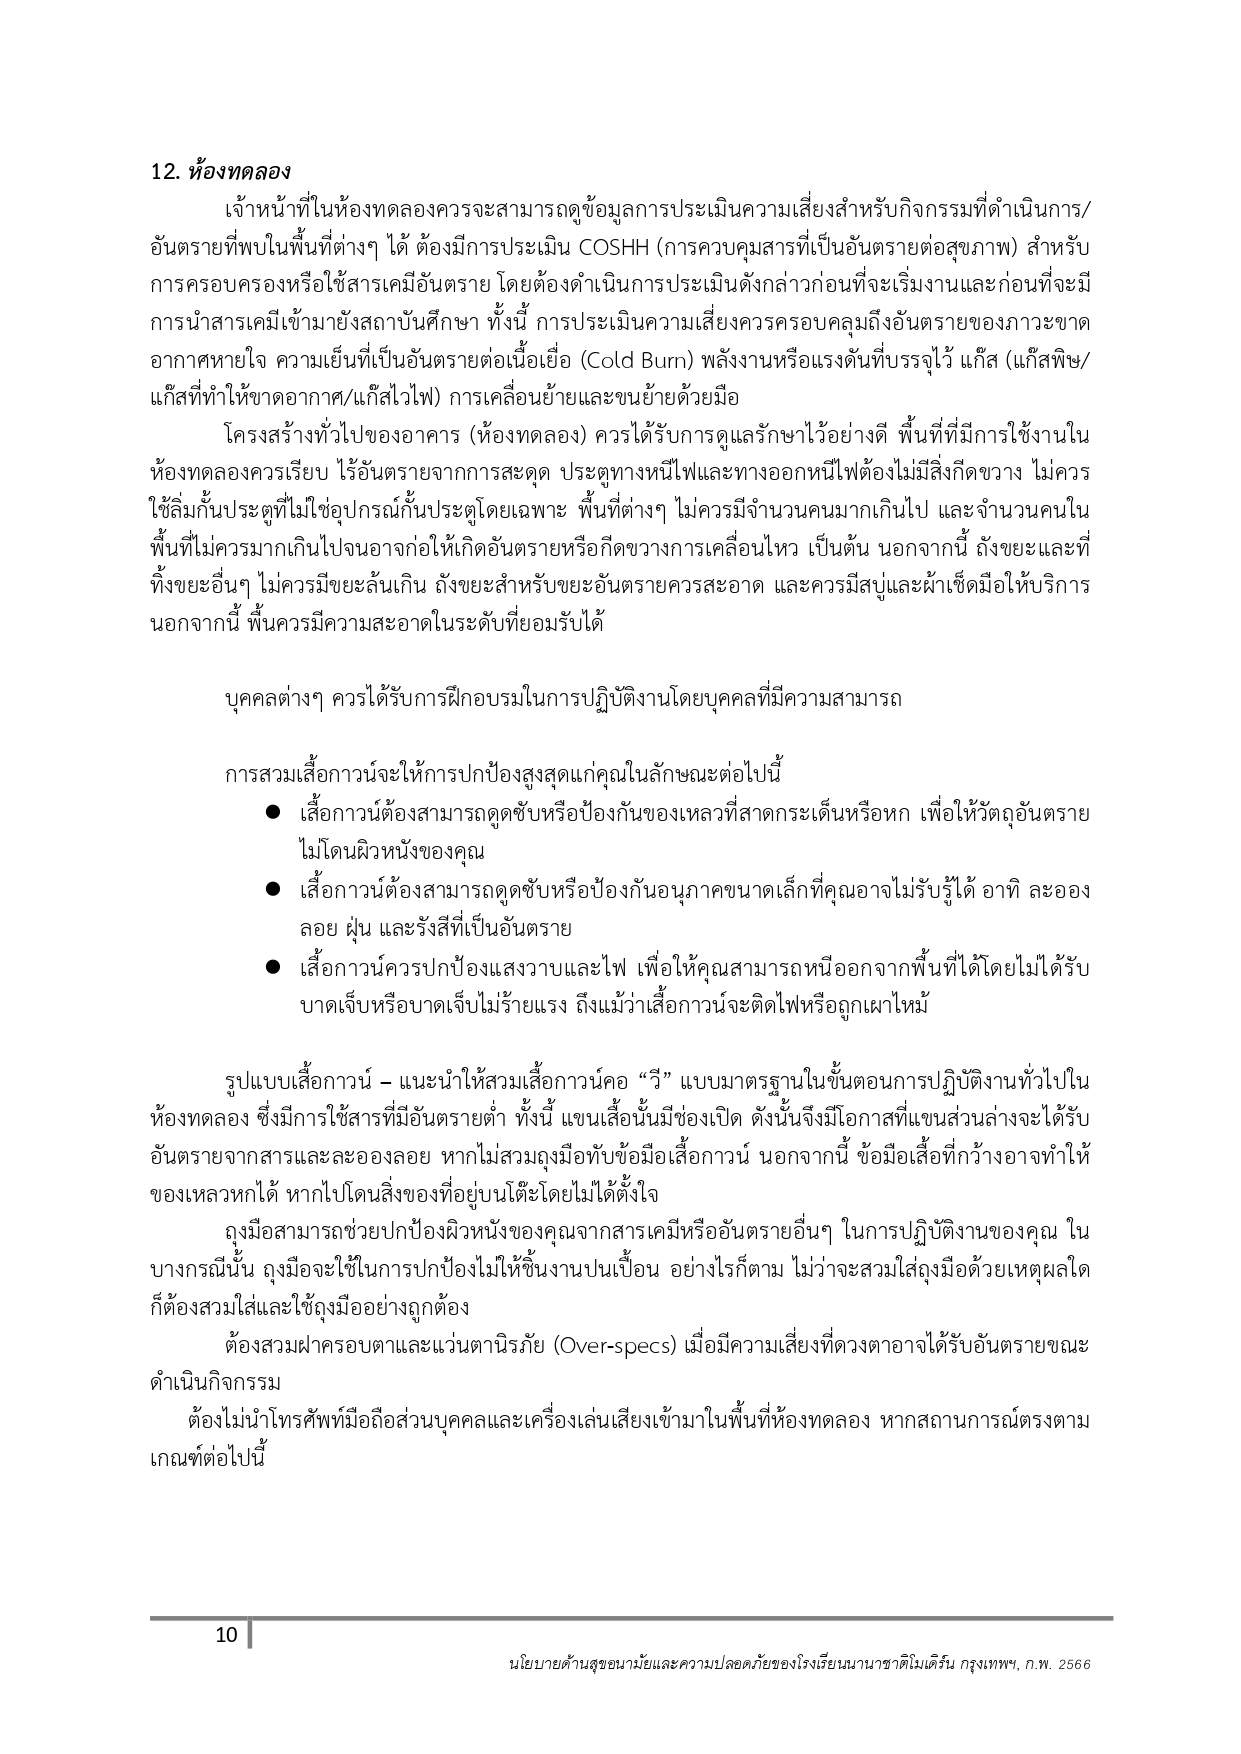 Health and Safety Policy แก้ไขภาษาไทย page 0010